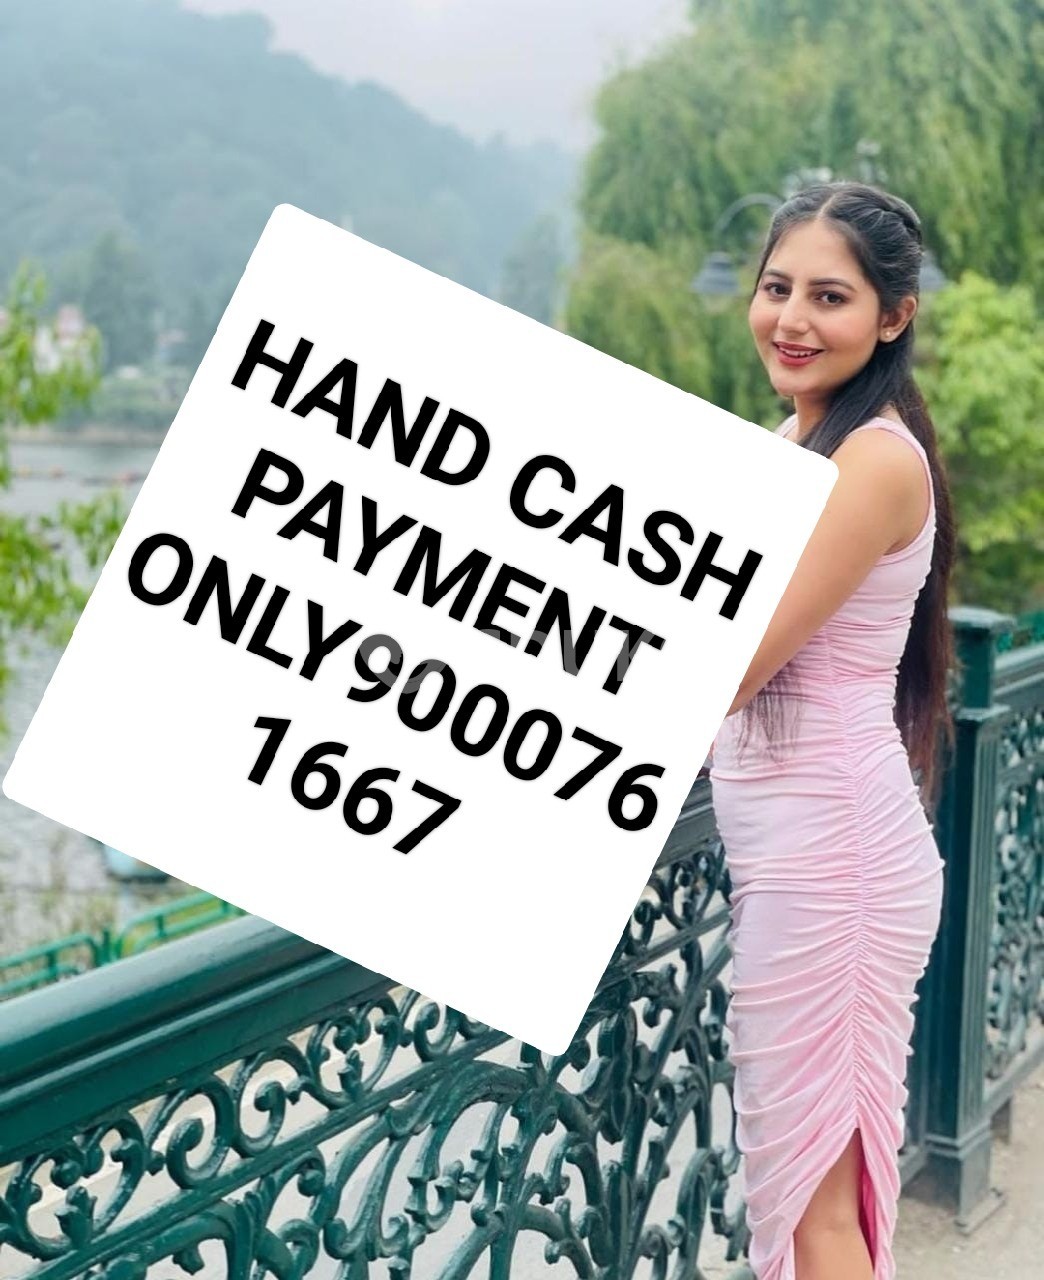 9OOO761667 CALL GIRLS IN VIJAYAWADA ESCORTS NO ADVANCE ONLY CASH PAYMENT SERVICE